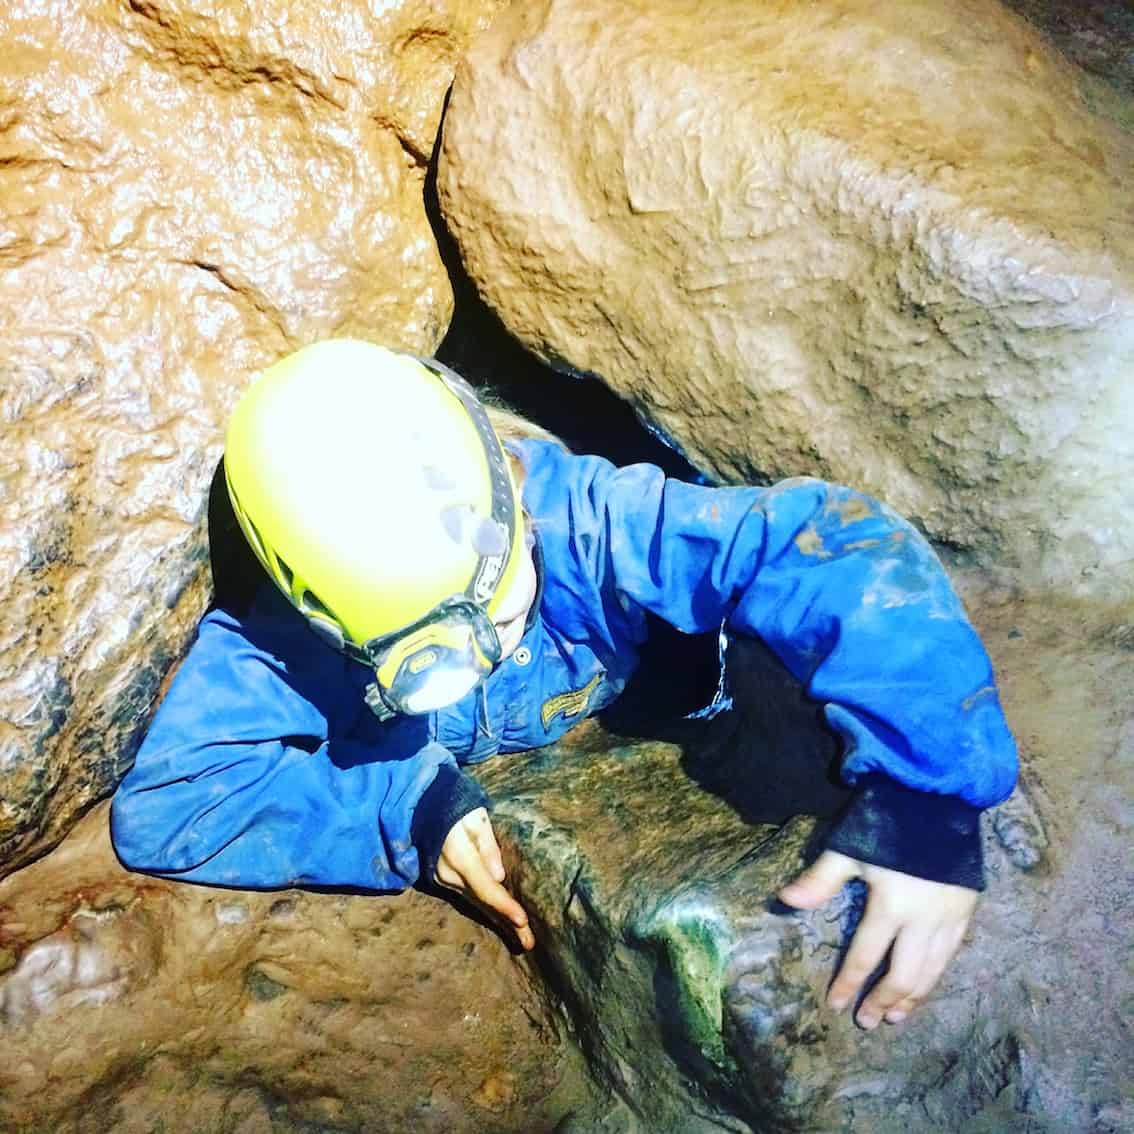 caving in devon - climbing through a small hole